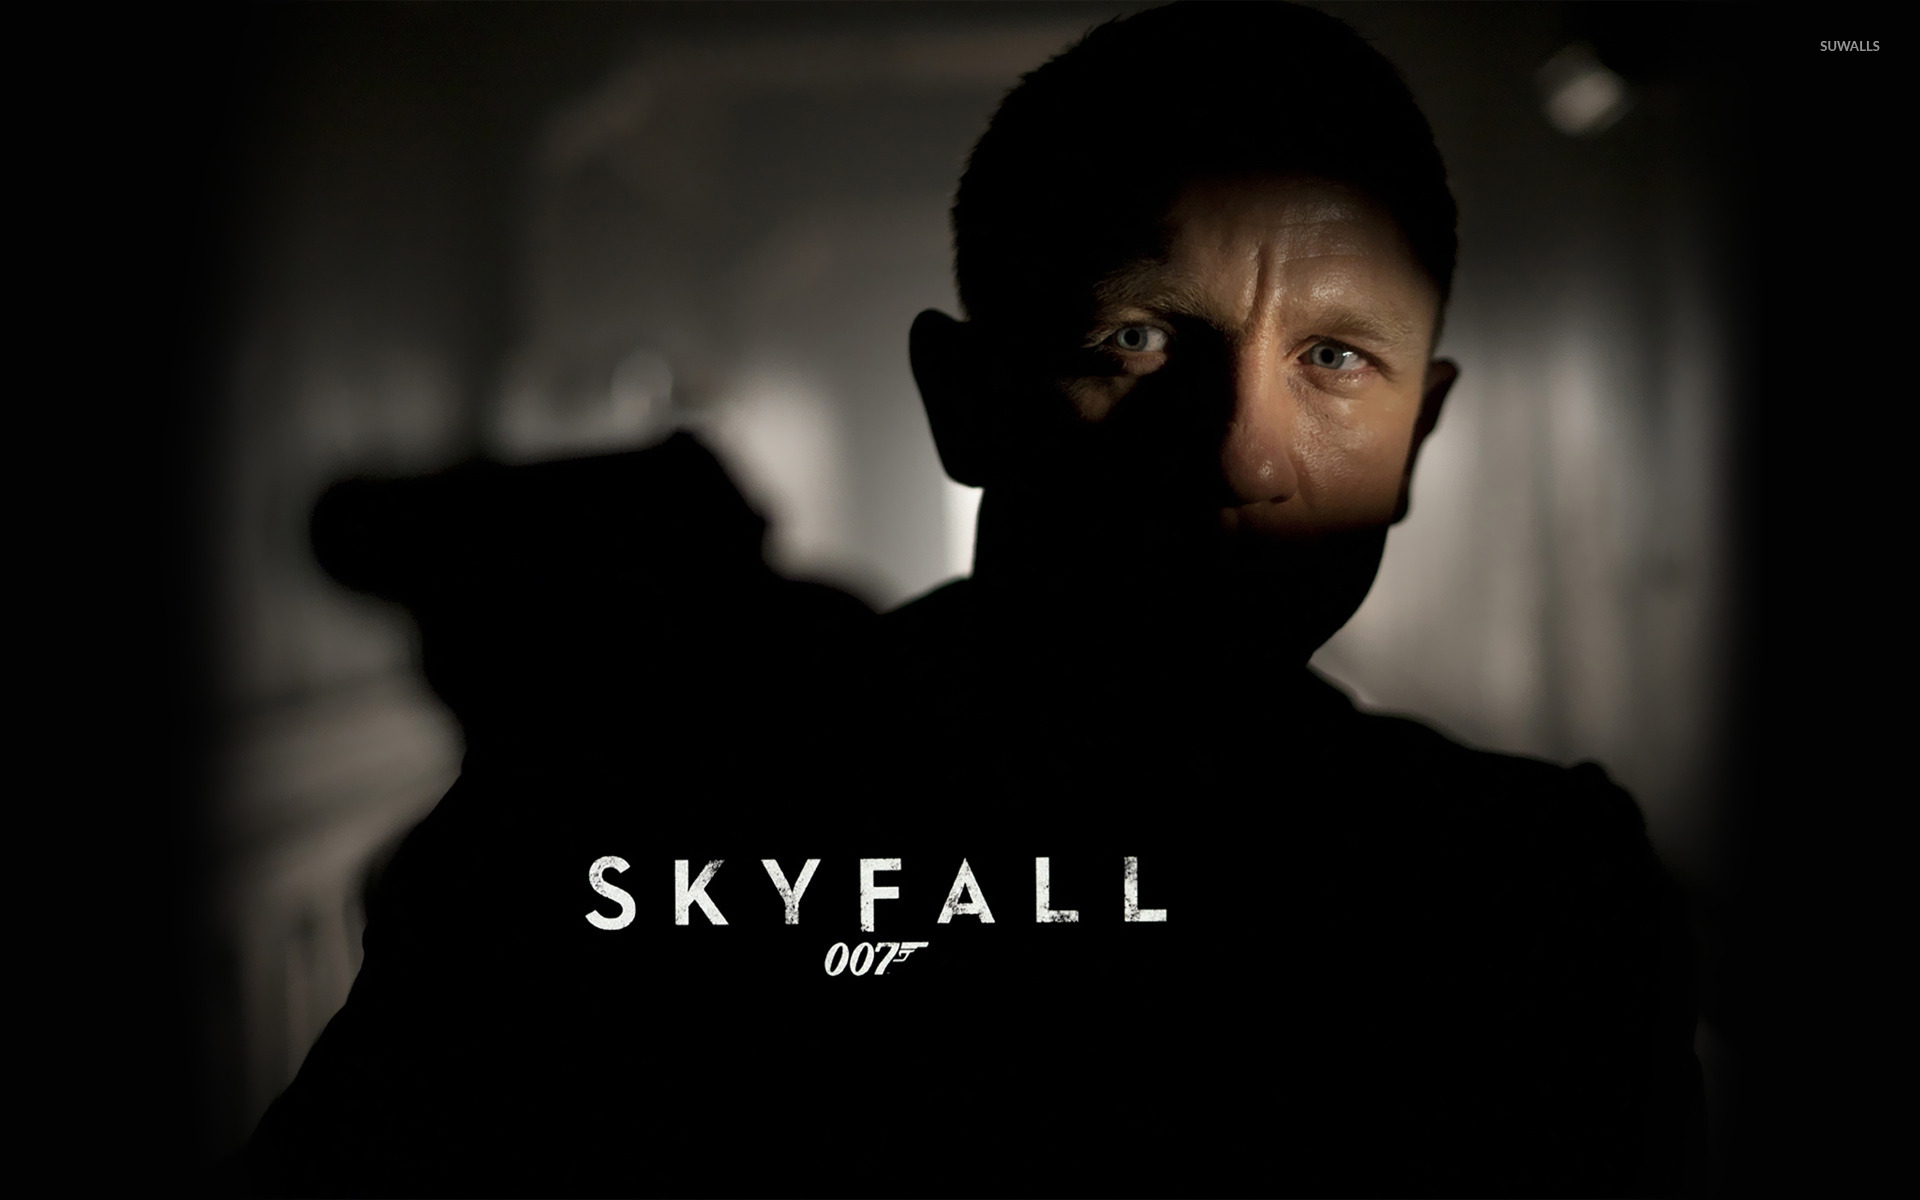 James Bond - Skyfall [3] wallpaper - Movie wallpapers - #14248